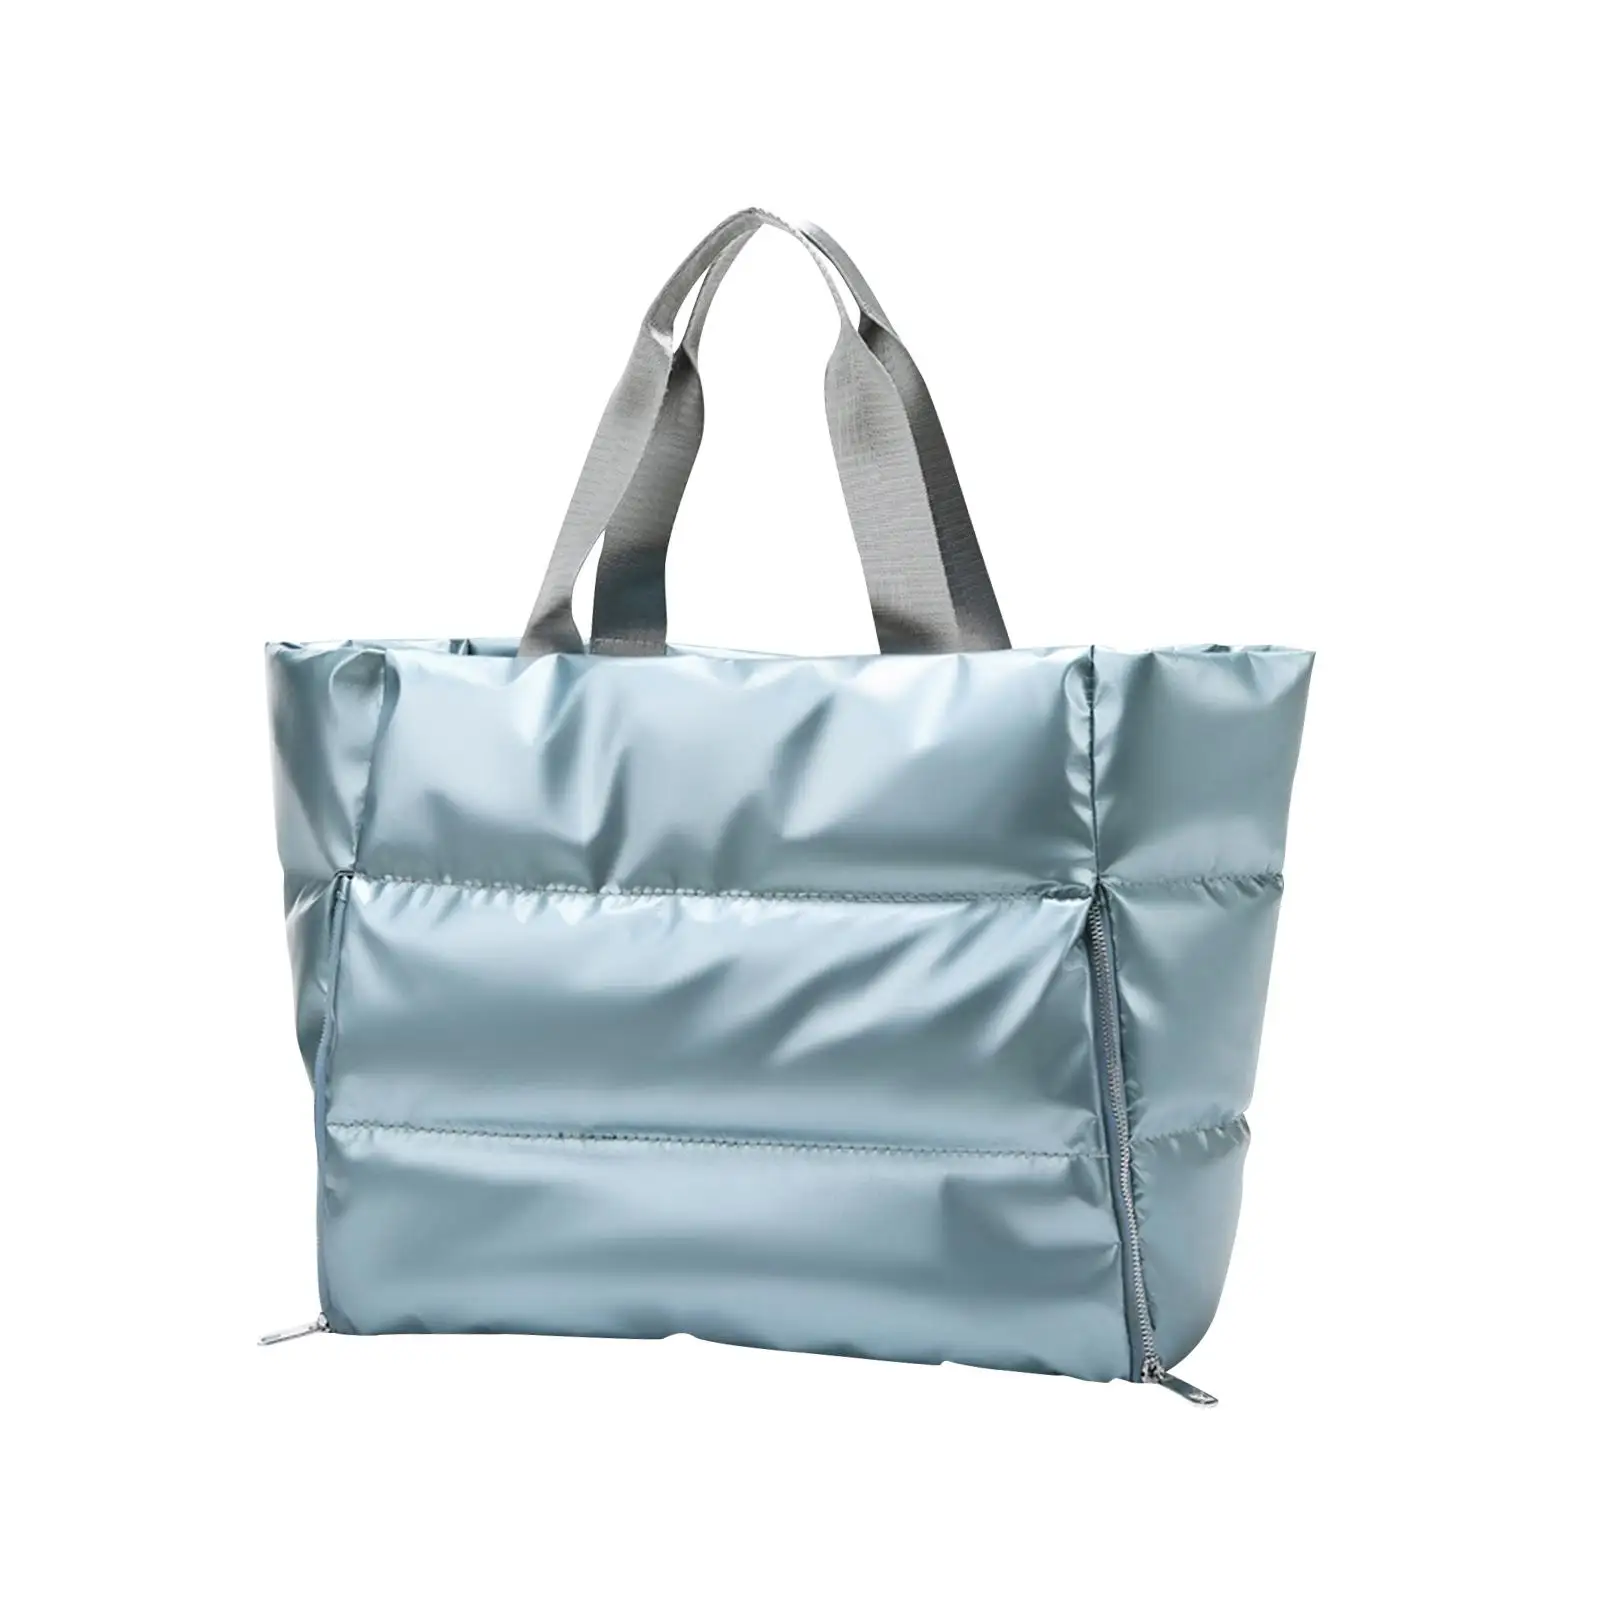 Duffle Bag Tote Adjustable Detachable Strap Shoulder Bag Travel Luggage Bag Sports Gym Bag for Golf Fitness Swimming Trip Yoga